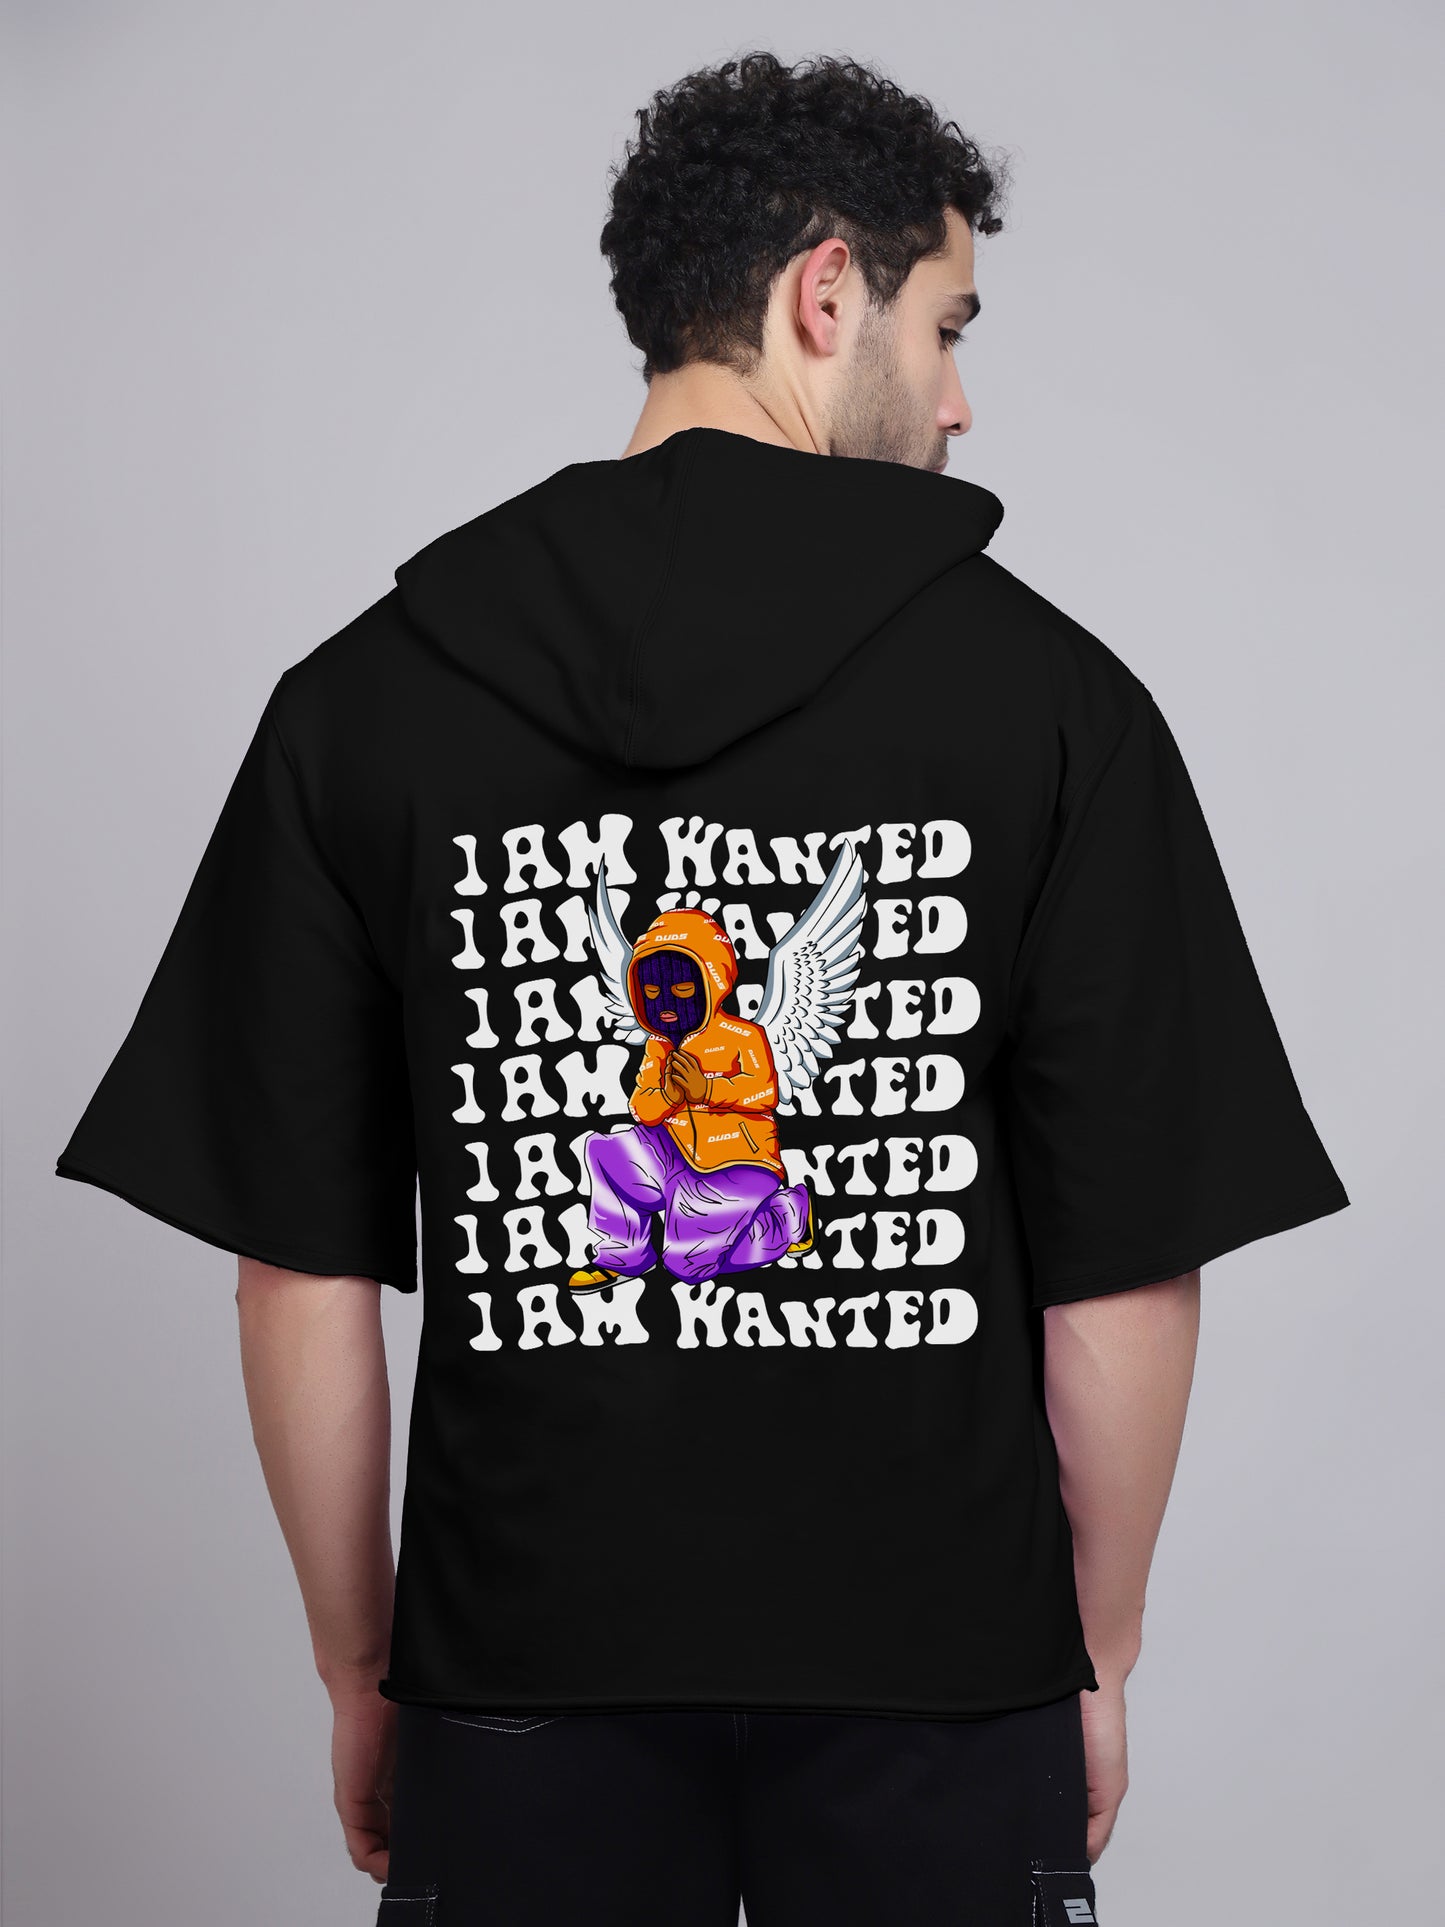 Wanted Kimono sleeve All season Hoodies T-Shirt (Black) - Wearduds